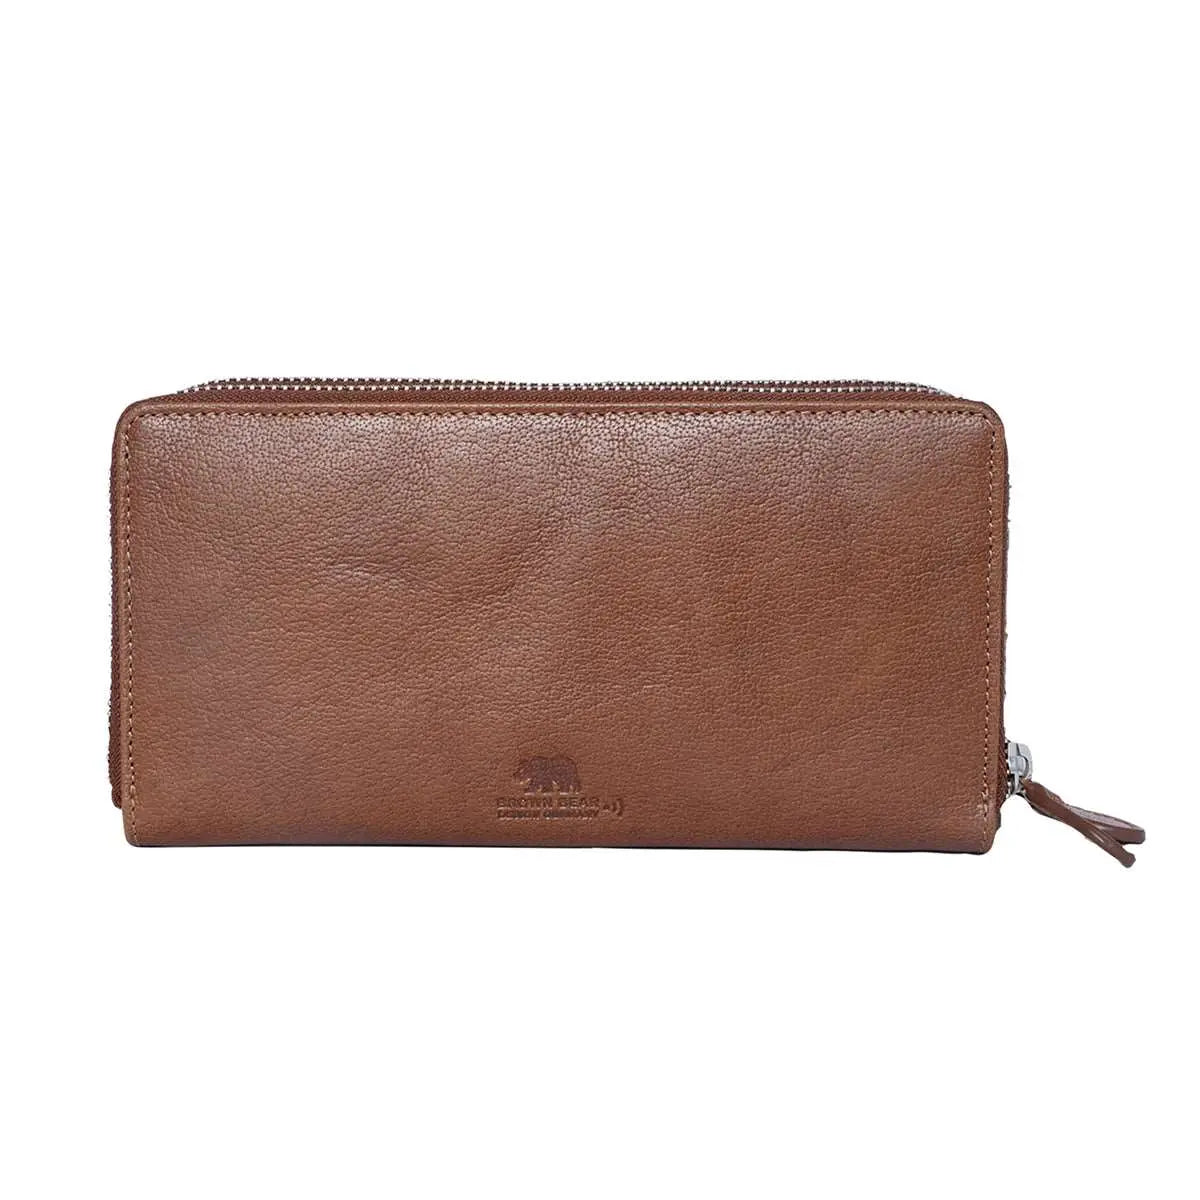 Double Zip Around Ladies Wallet with External pocket in Genuine Leather - Brown Bear